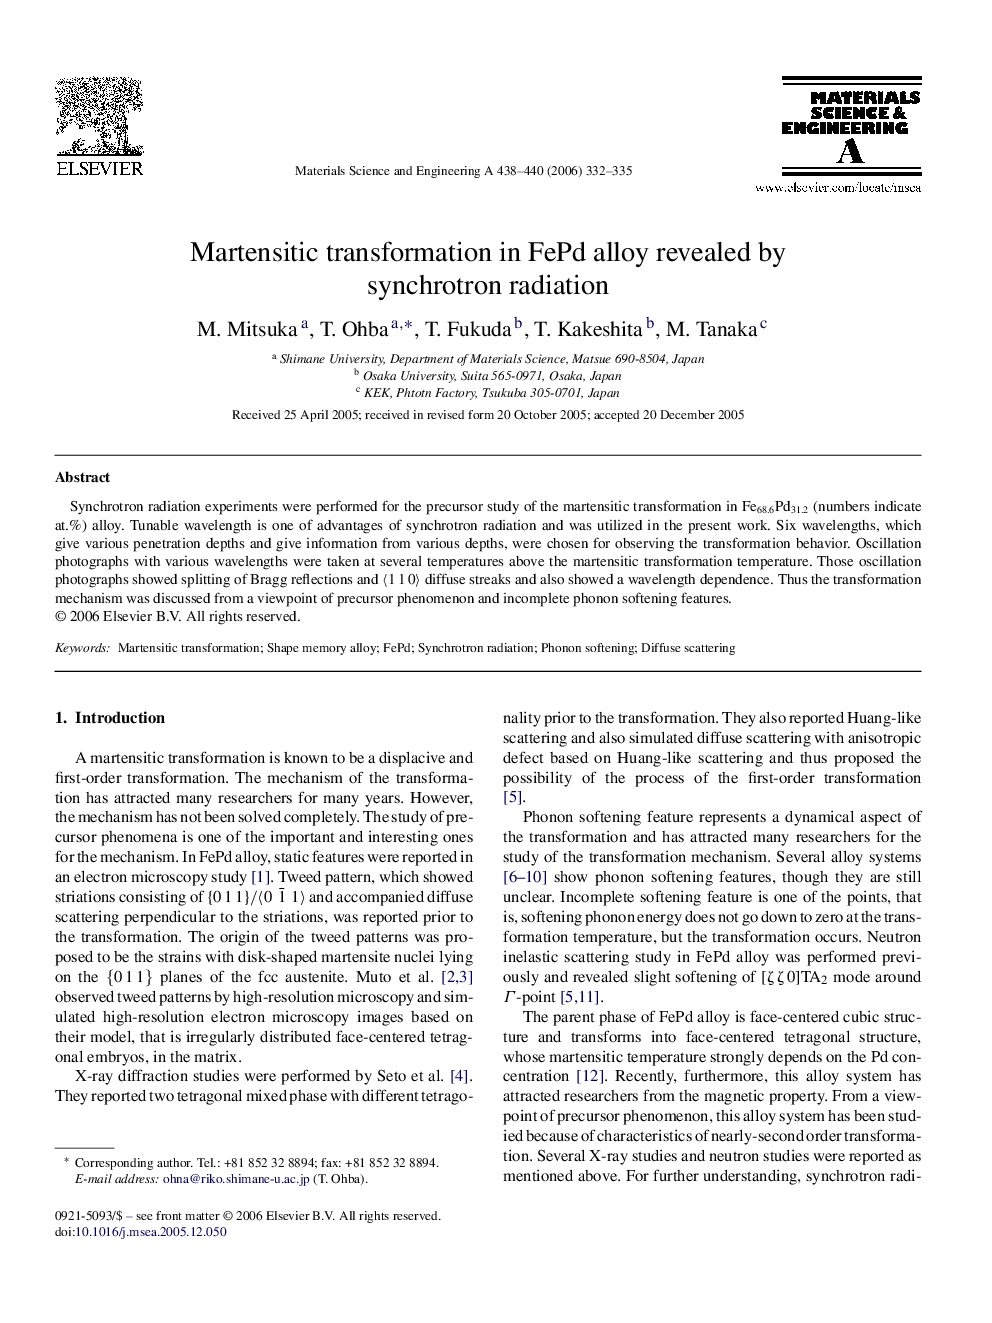 Martensitic transformation in FePd alloy revealed by synchrotron radiation